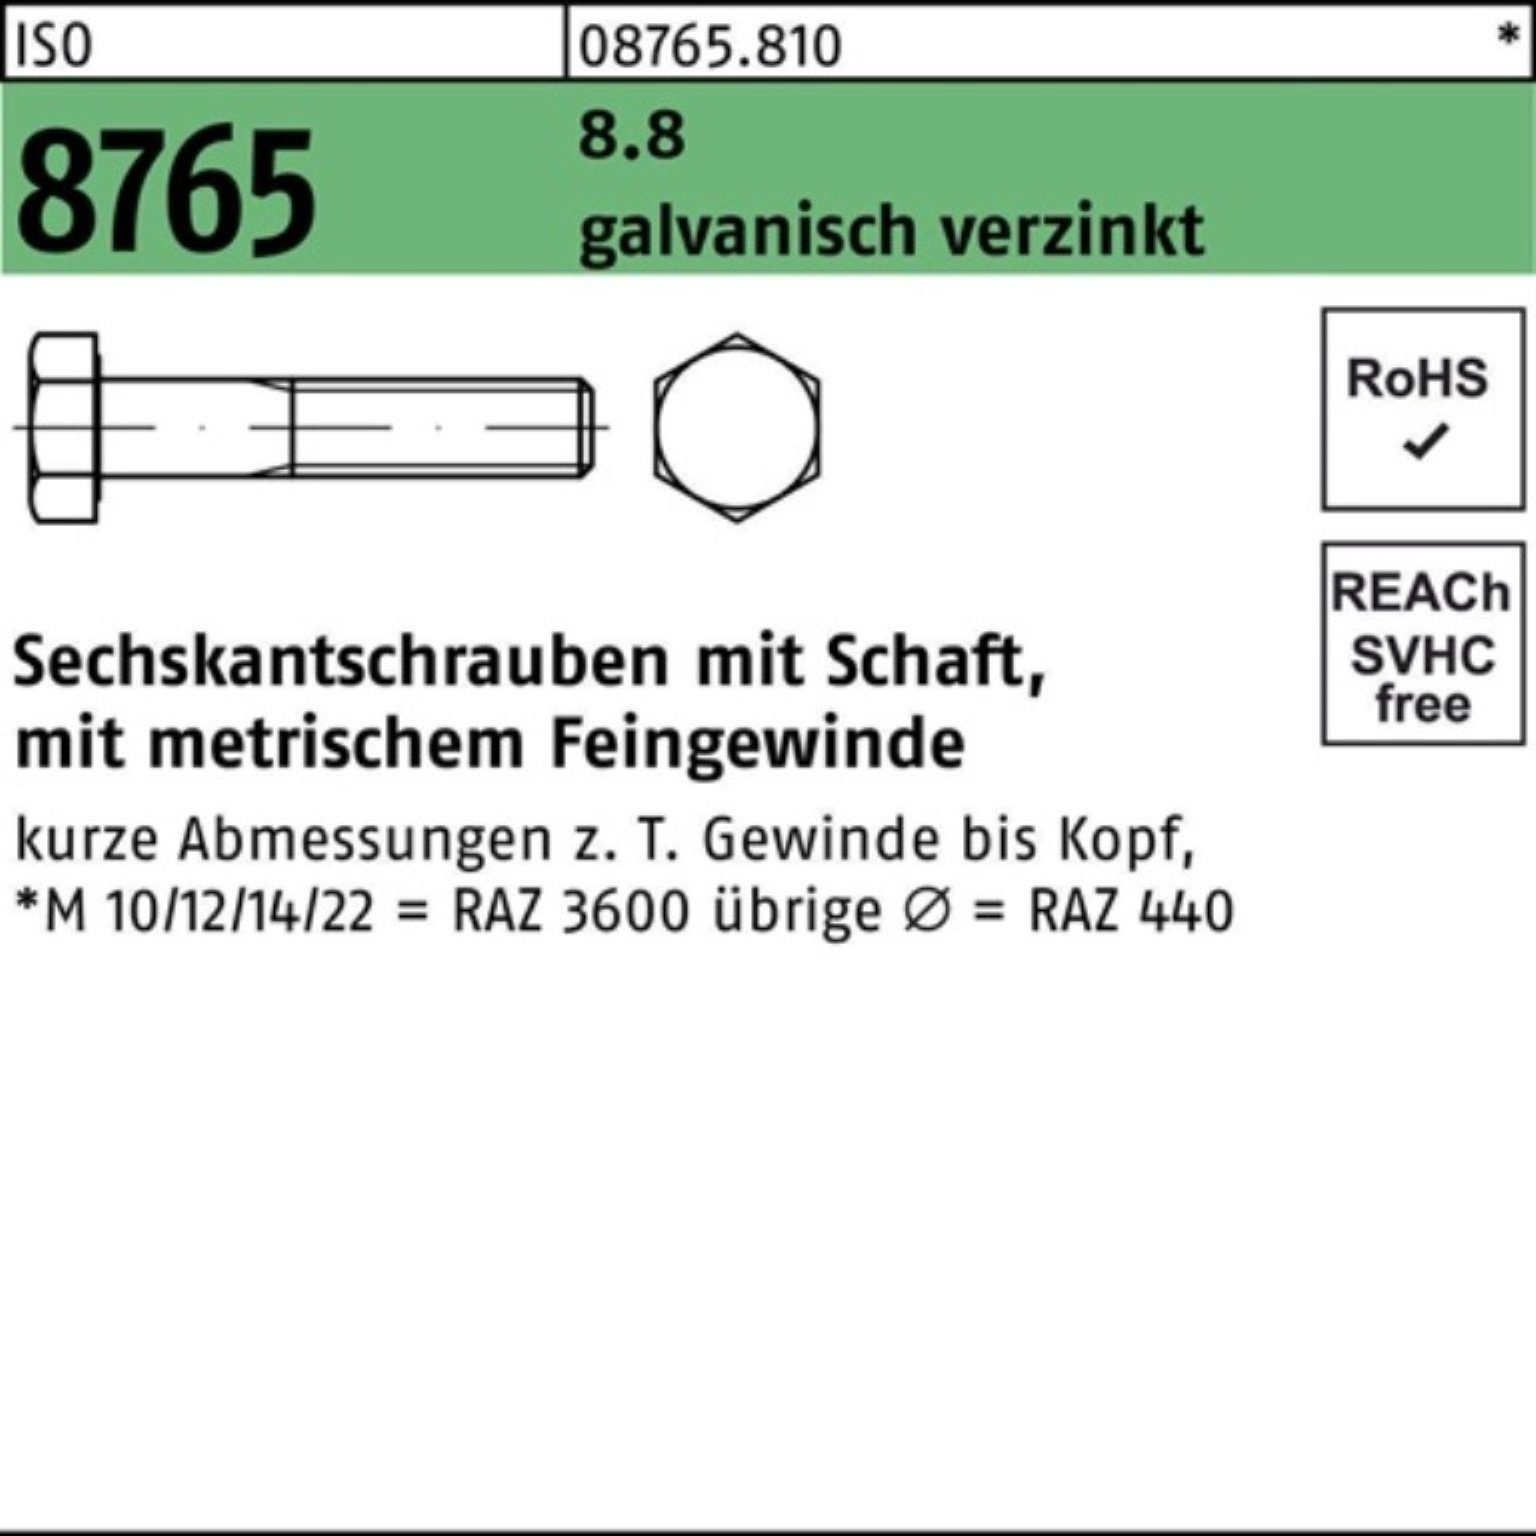 Sechskantschraube Reyher Sechskantschraube 8.8 galv.verz 65 M12x1,5x Pack 8765 Schaft 100er ISO